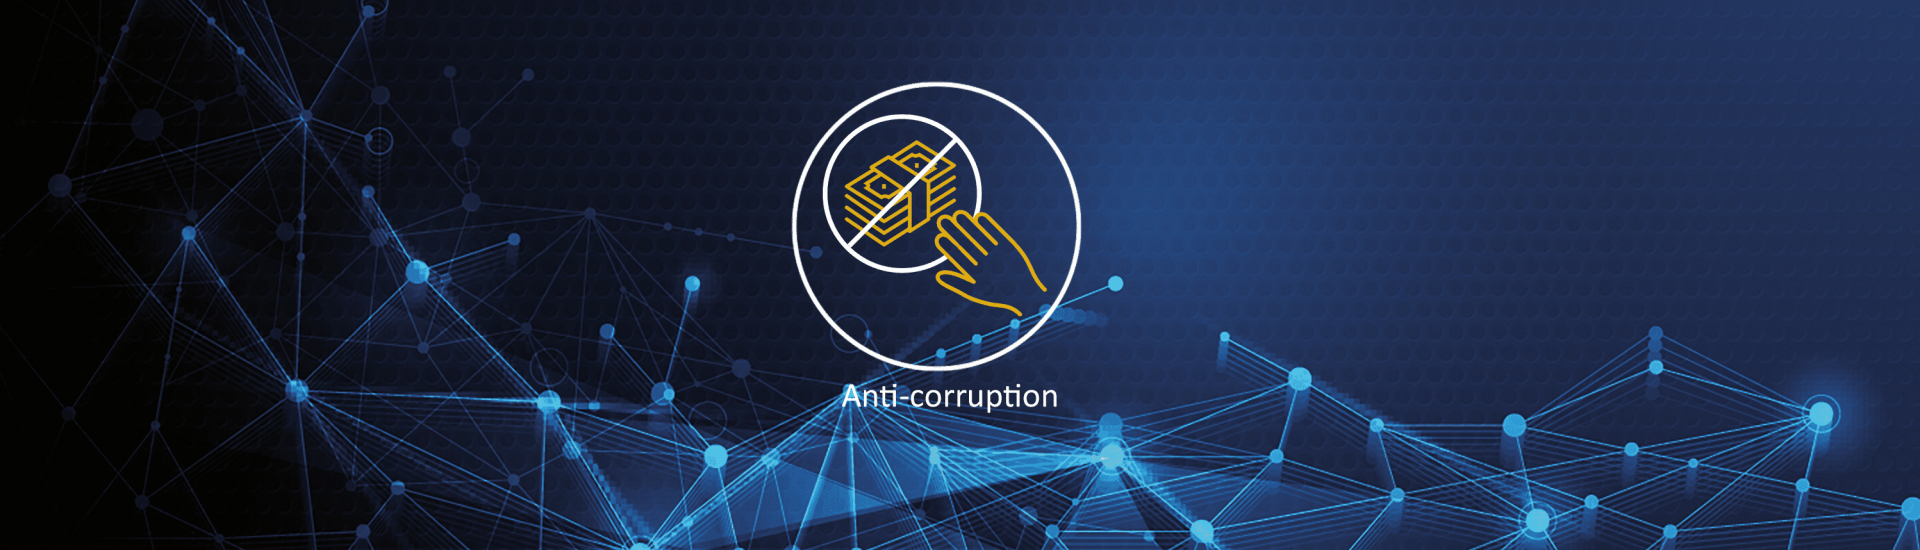 Anti-corruption